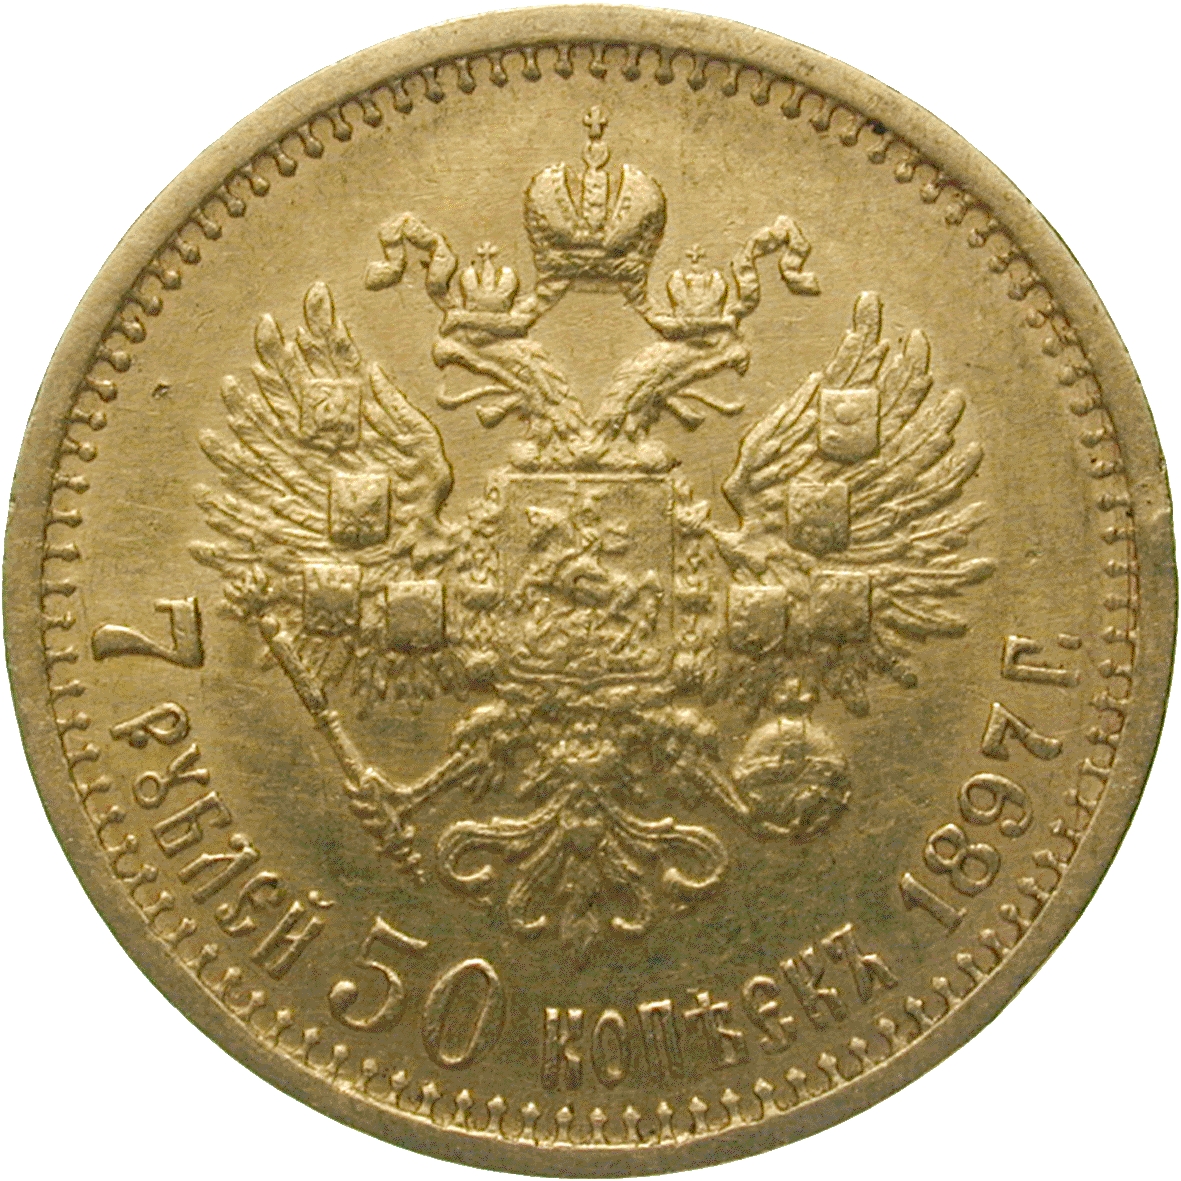 Russian Empire, Nicholas II, 7 Rubles 50 Kopecks 1897 (reverse)